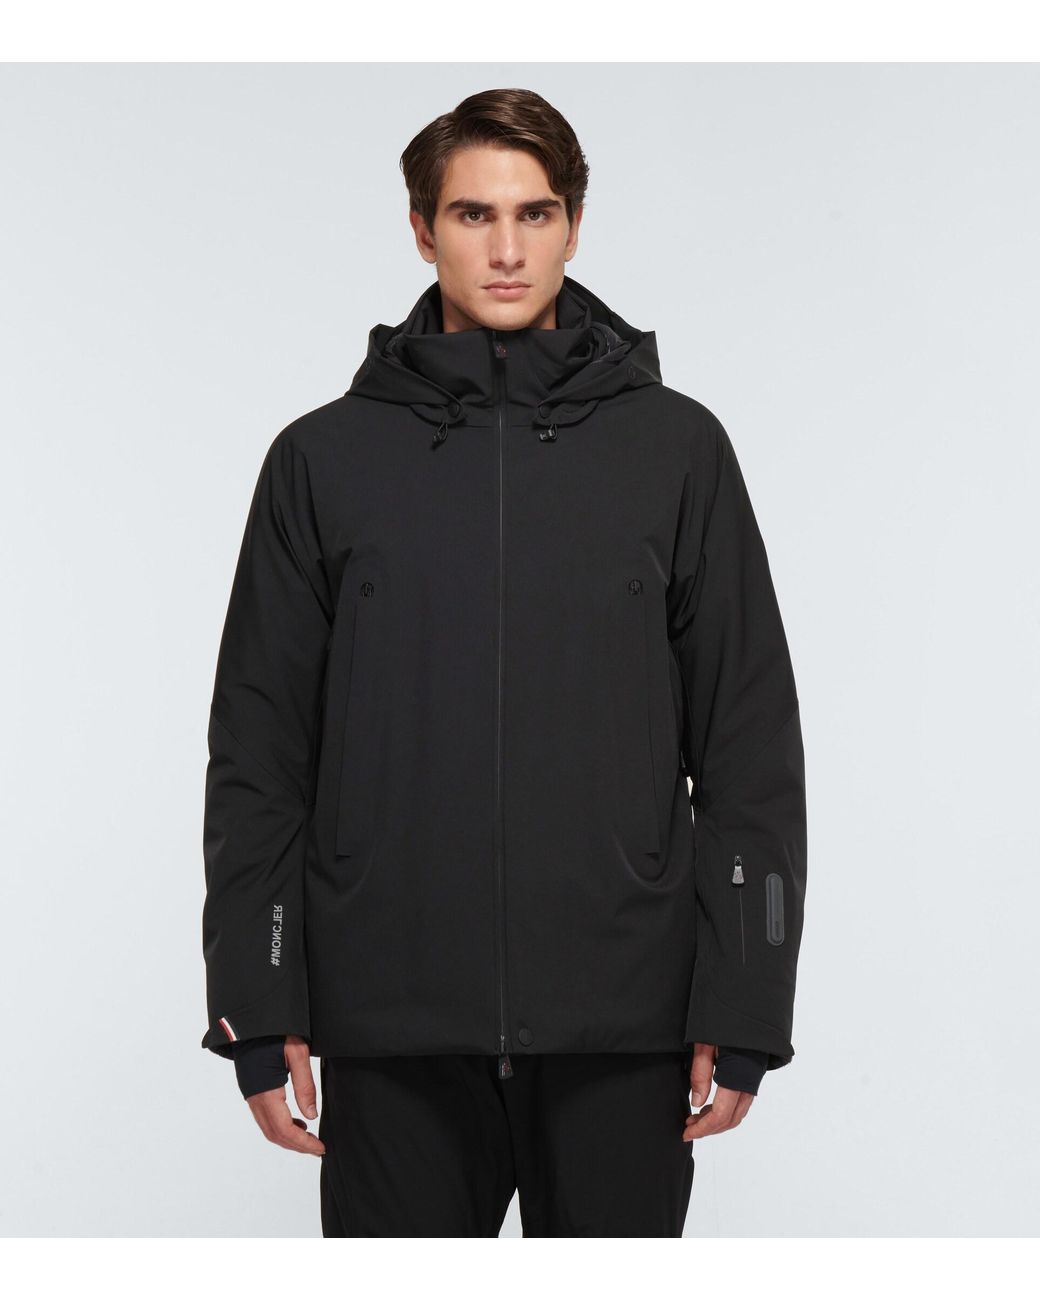 3 MONCLER GRENOBLE Boden Technical Jacket in Black for Men | Lyst